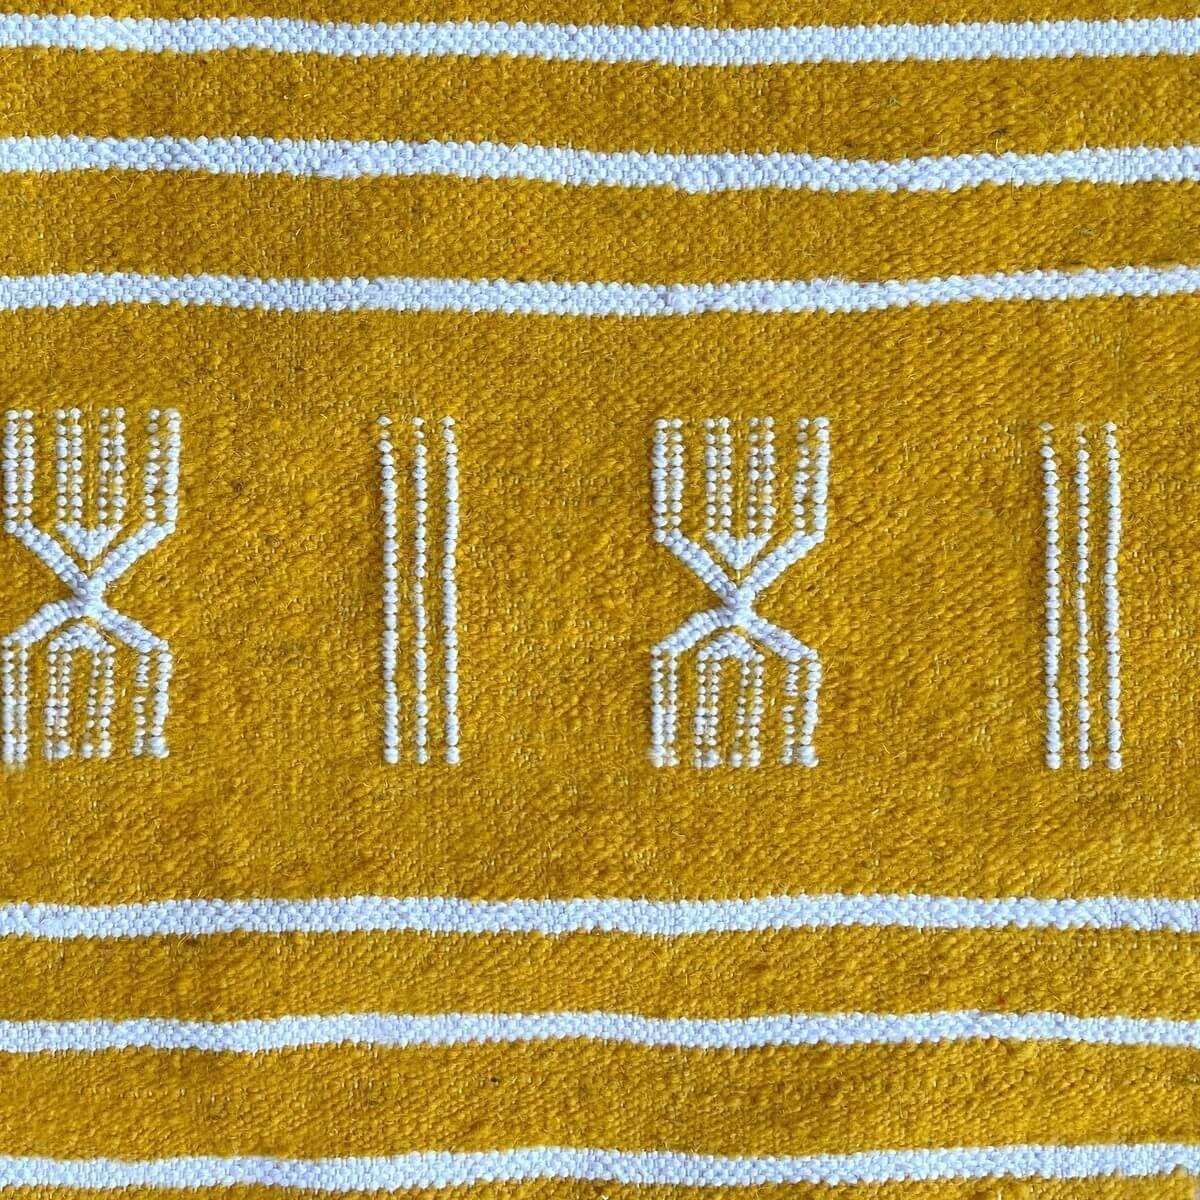 Berber tapijt Tapijt Kilim Jridi 96x193 Geel/Wit (Handgeweven, Wol, Tunesië) Tunesisch kilimdeken, Marokkaanse stijl. Rechthoeki